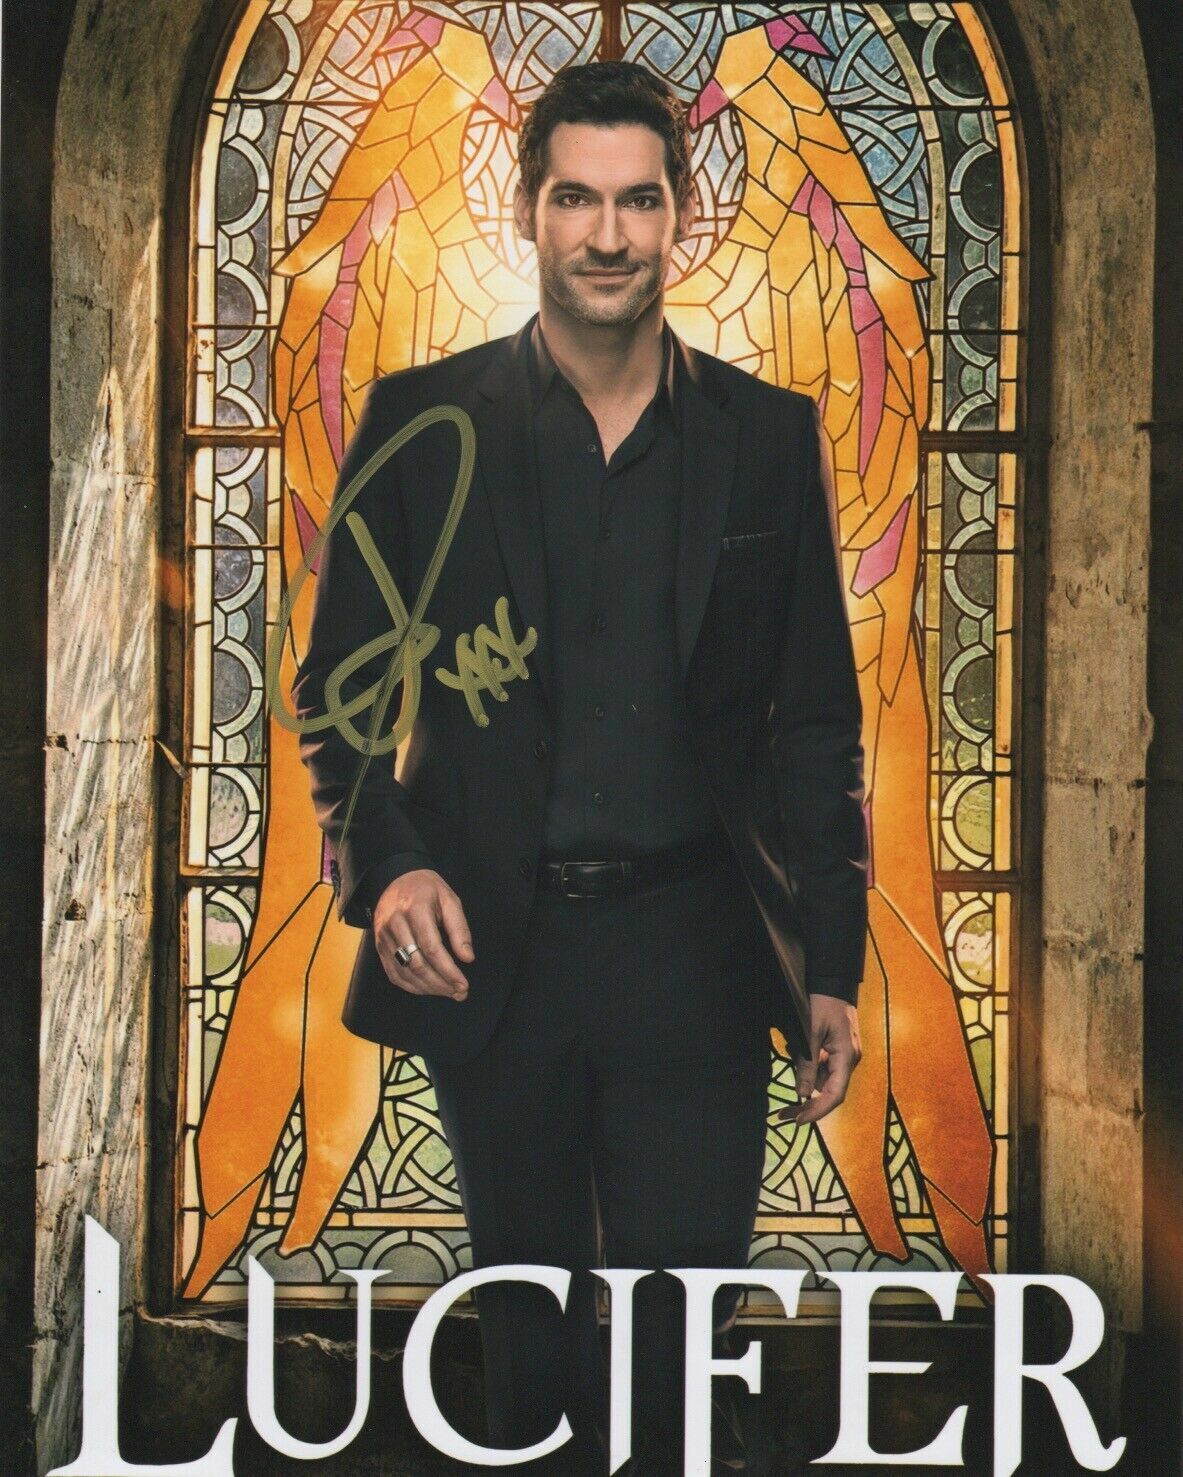 Tom Ellis Autographed Signed 8x10 Photo Poster painting ( Lucifer ) REPRINT